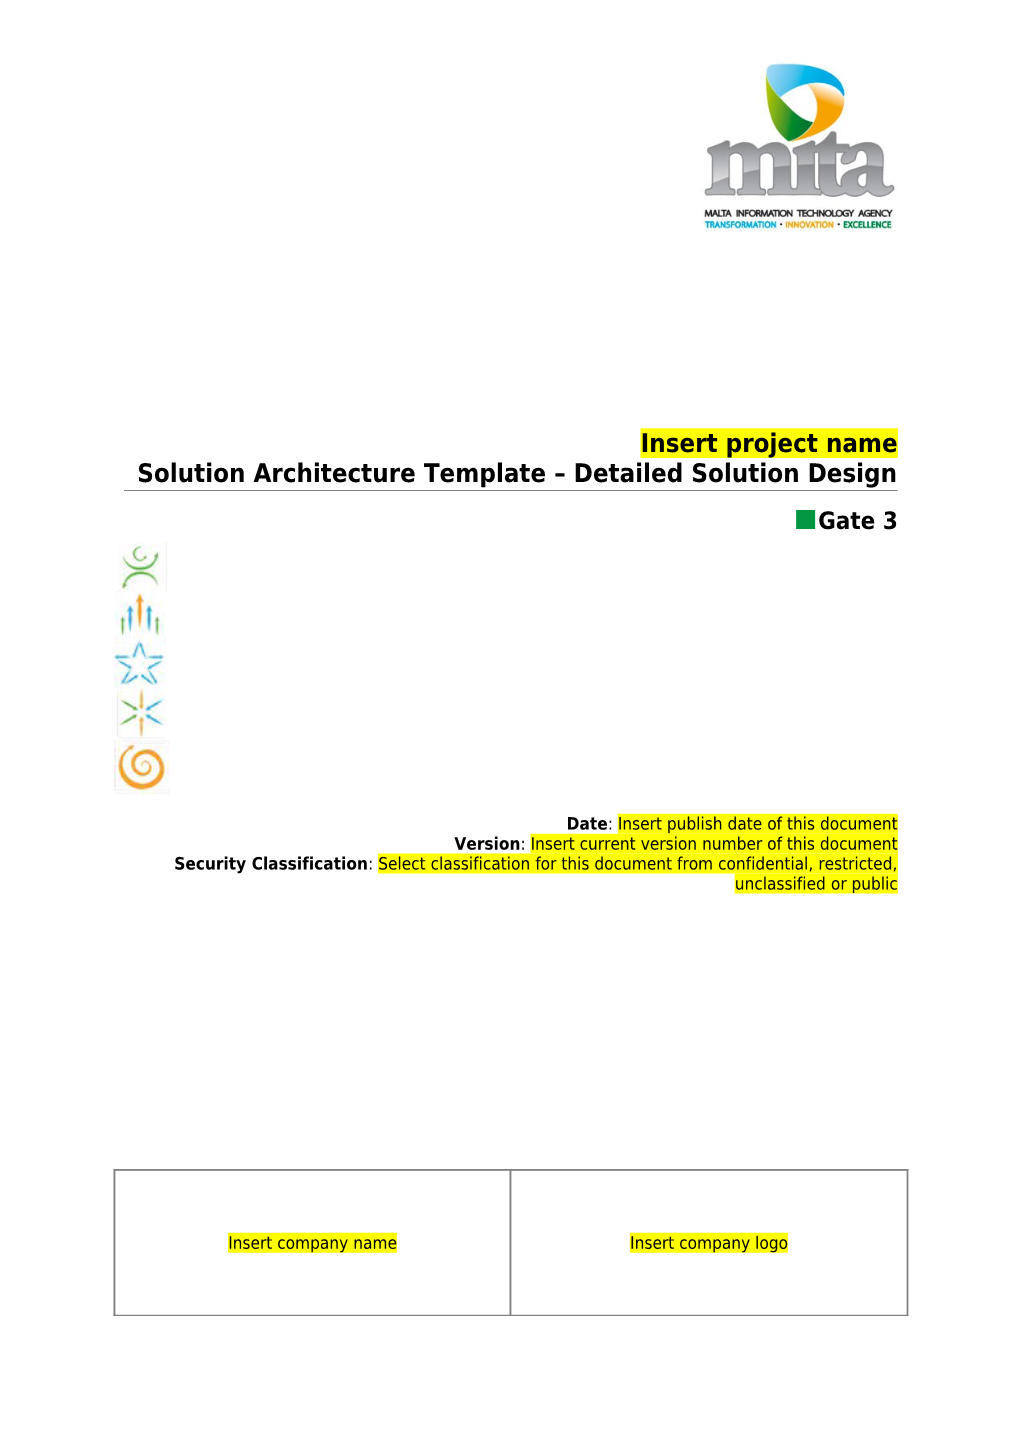 Solution Architecture Template Gate 3